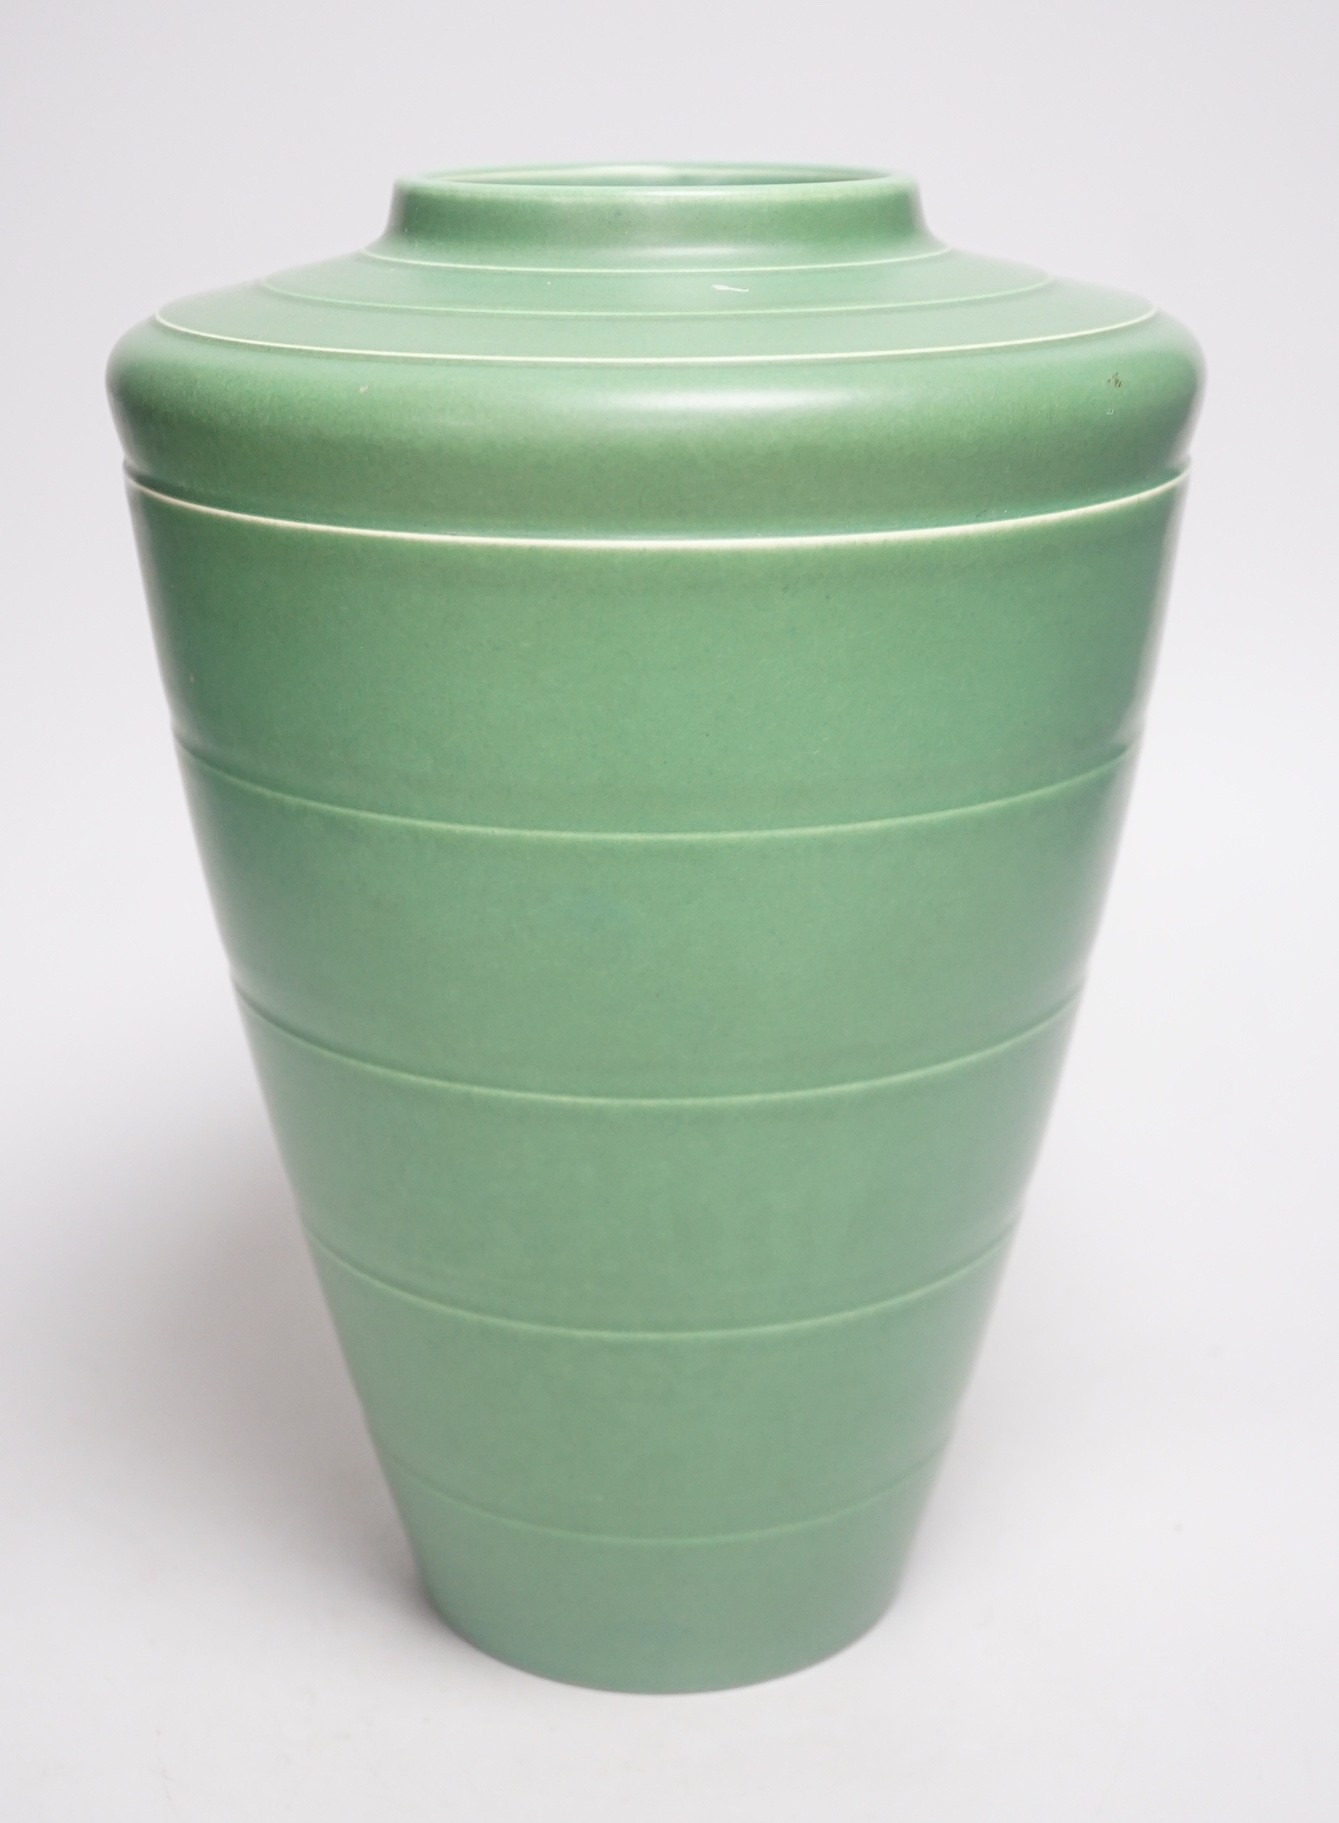 A Keith Murray for Wedgwood green monochromed shoulder vase, 28cm